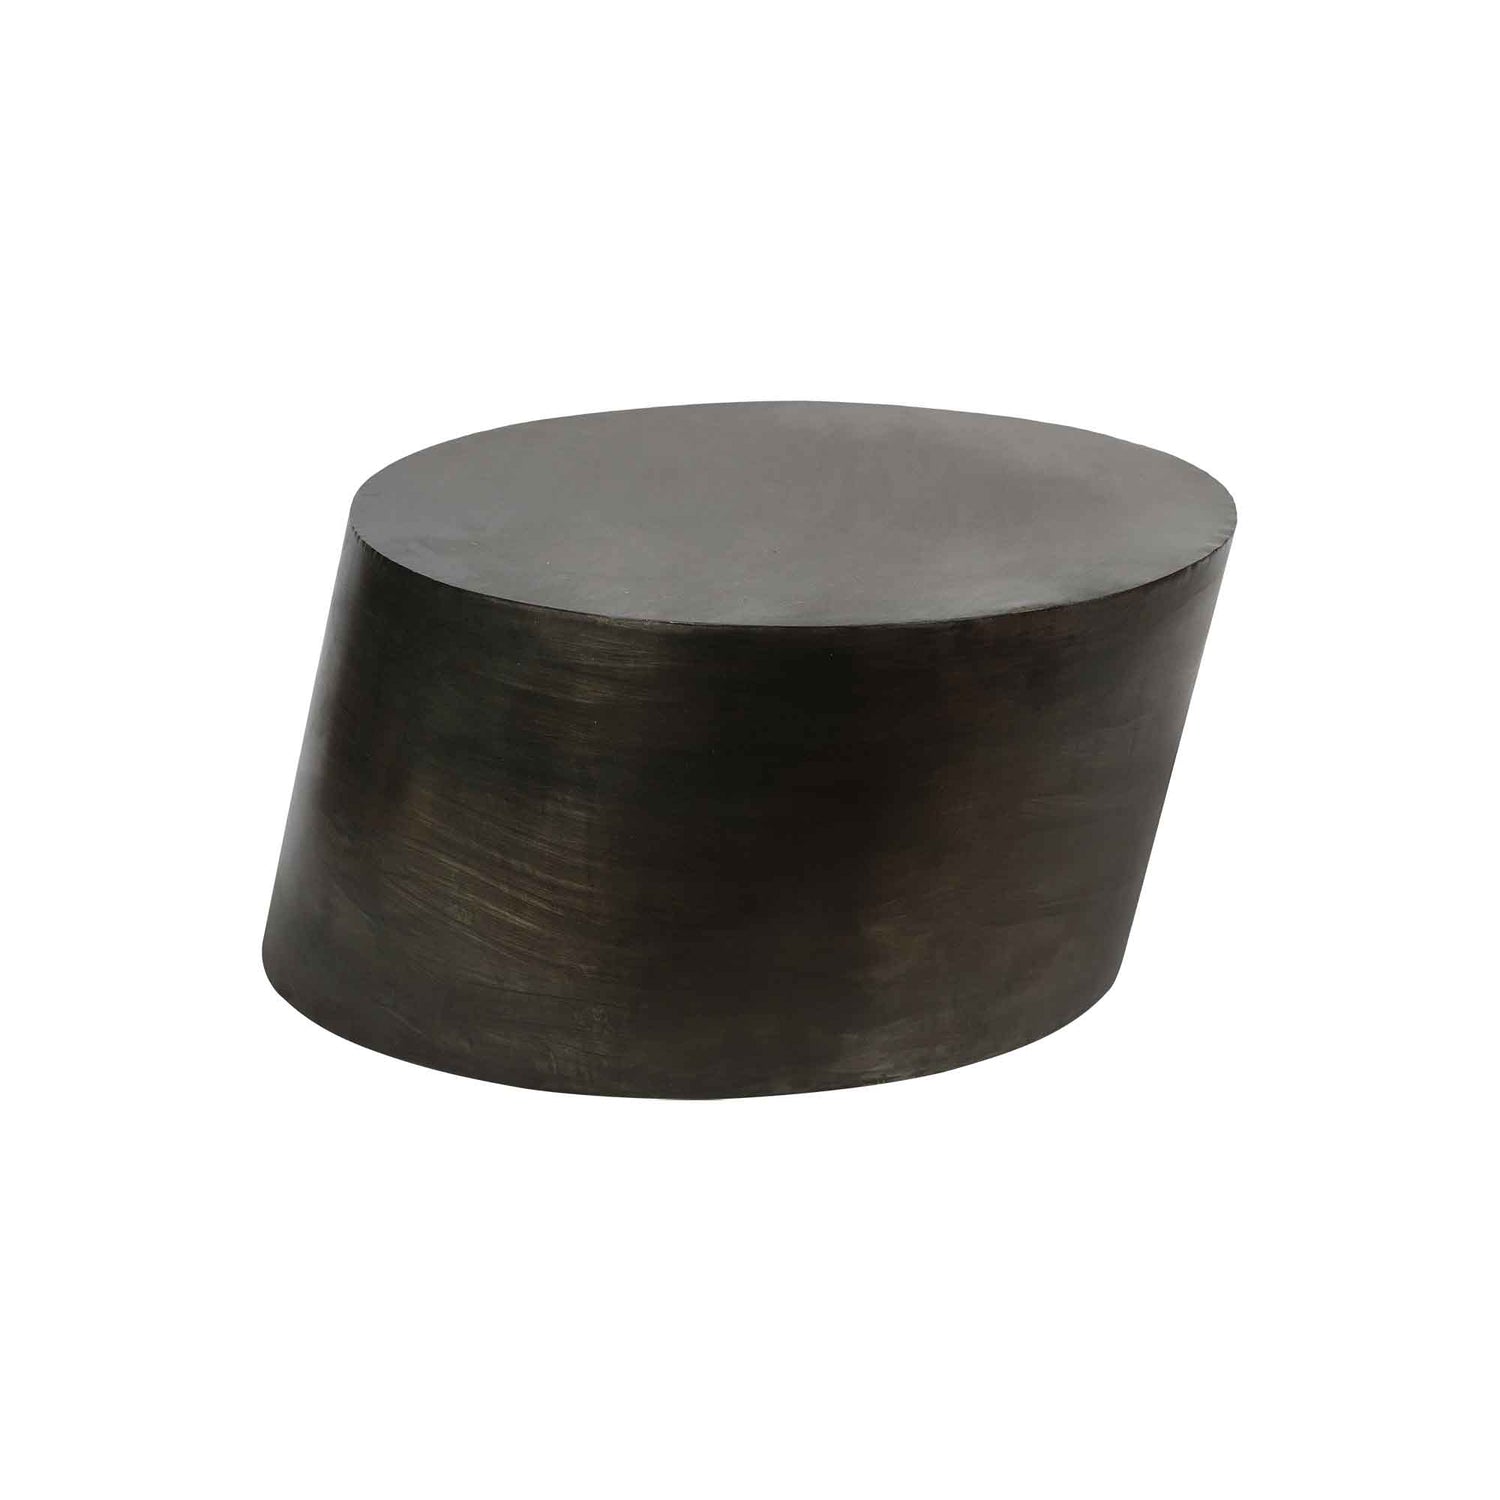 Elliptical shape cola black metallic coffee table in a plain background.